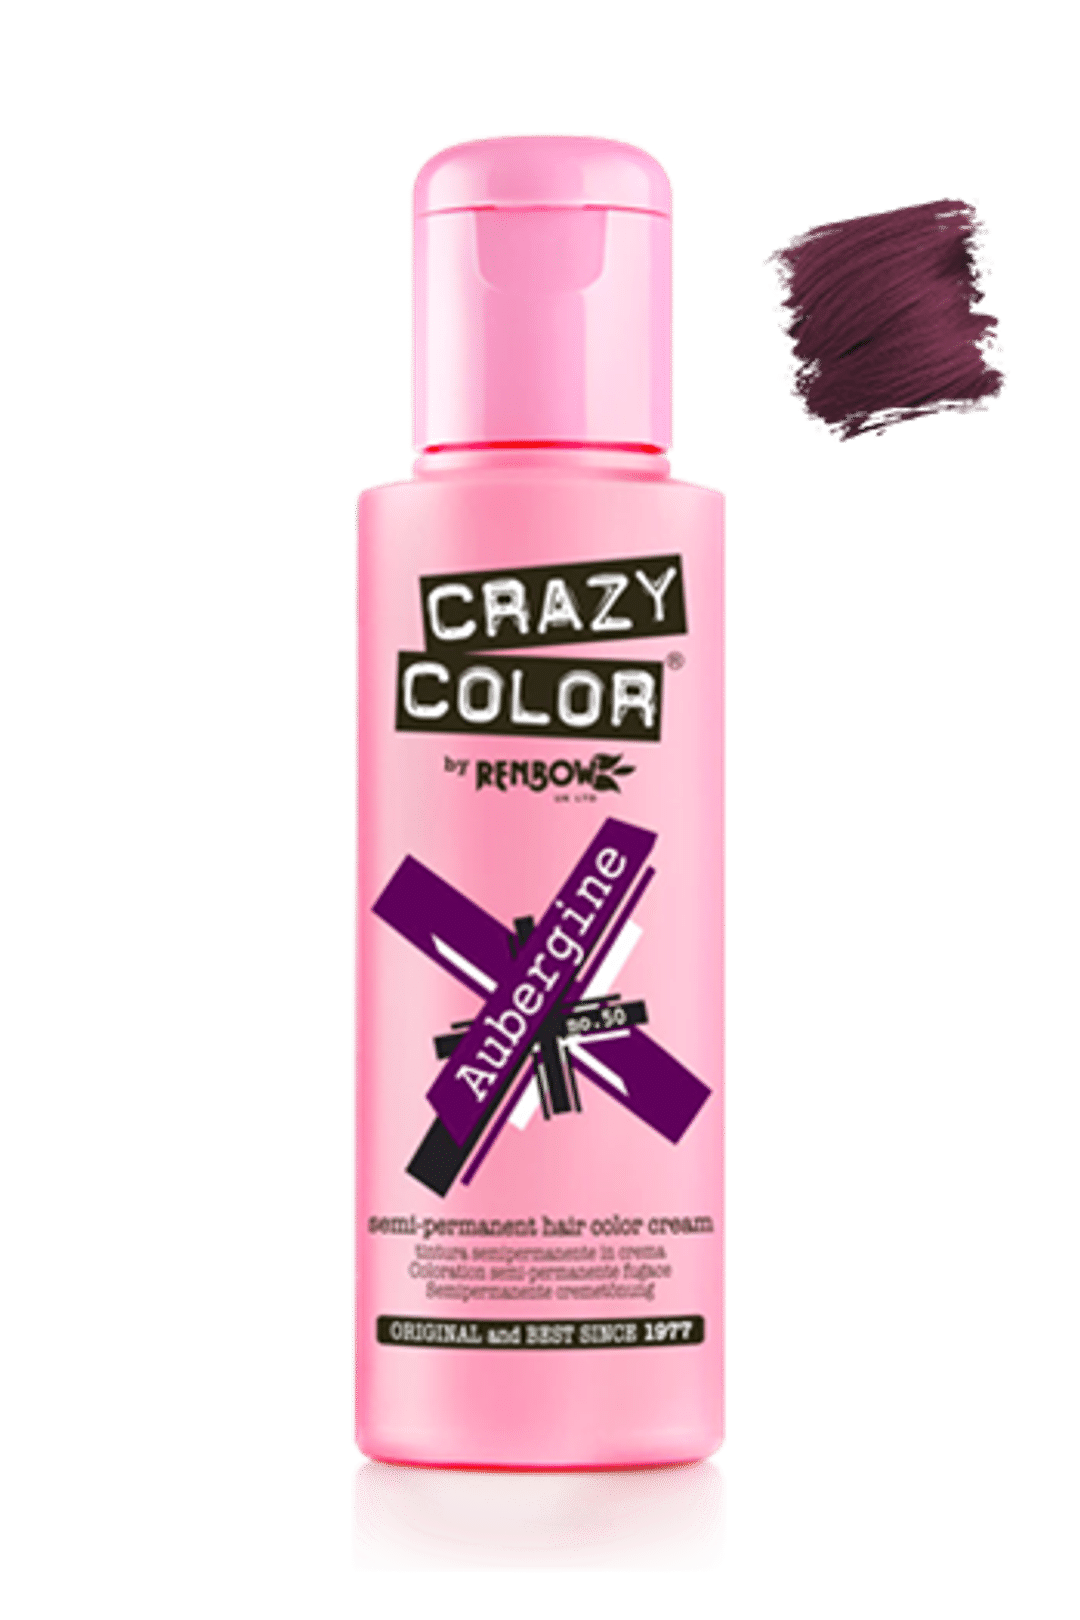 Crazy Color Semi Permanent Hair Color Cream - Aubergine